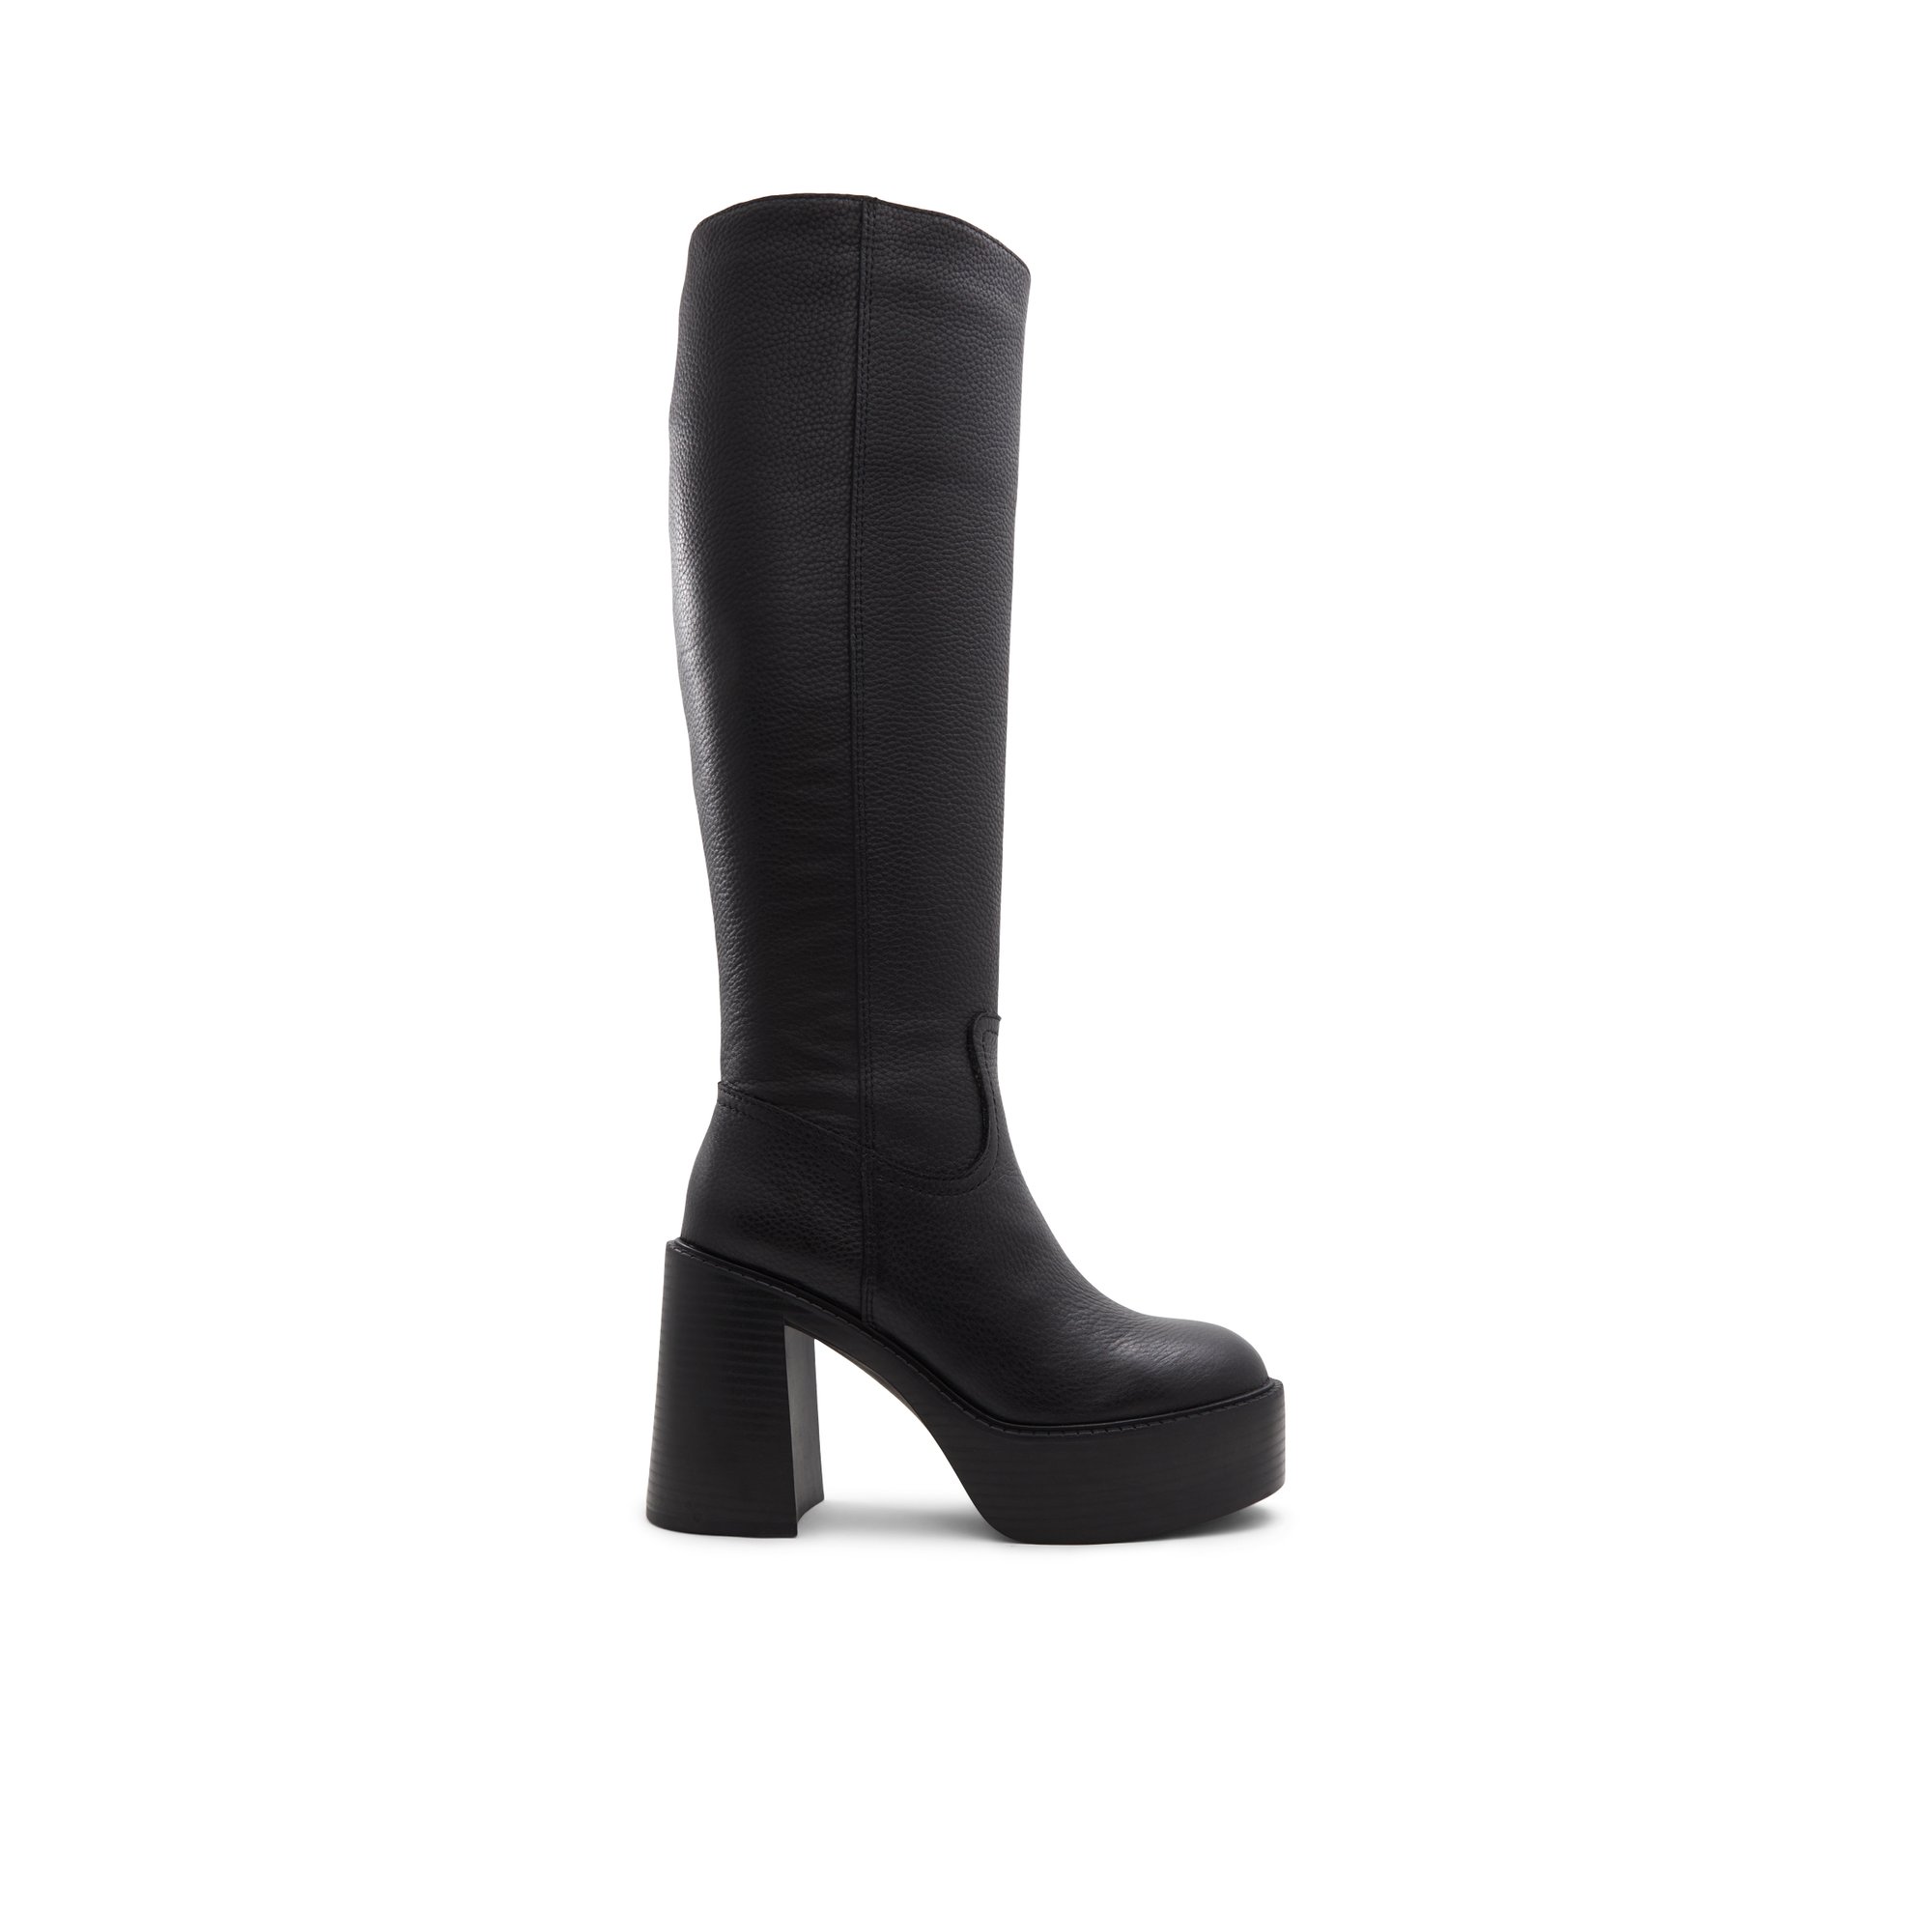 ALDO Rykiel - Women's Tall Boot - Black